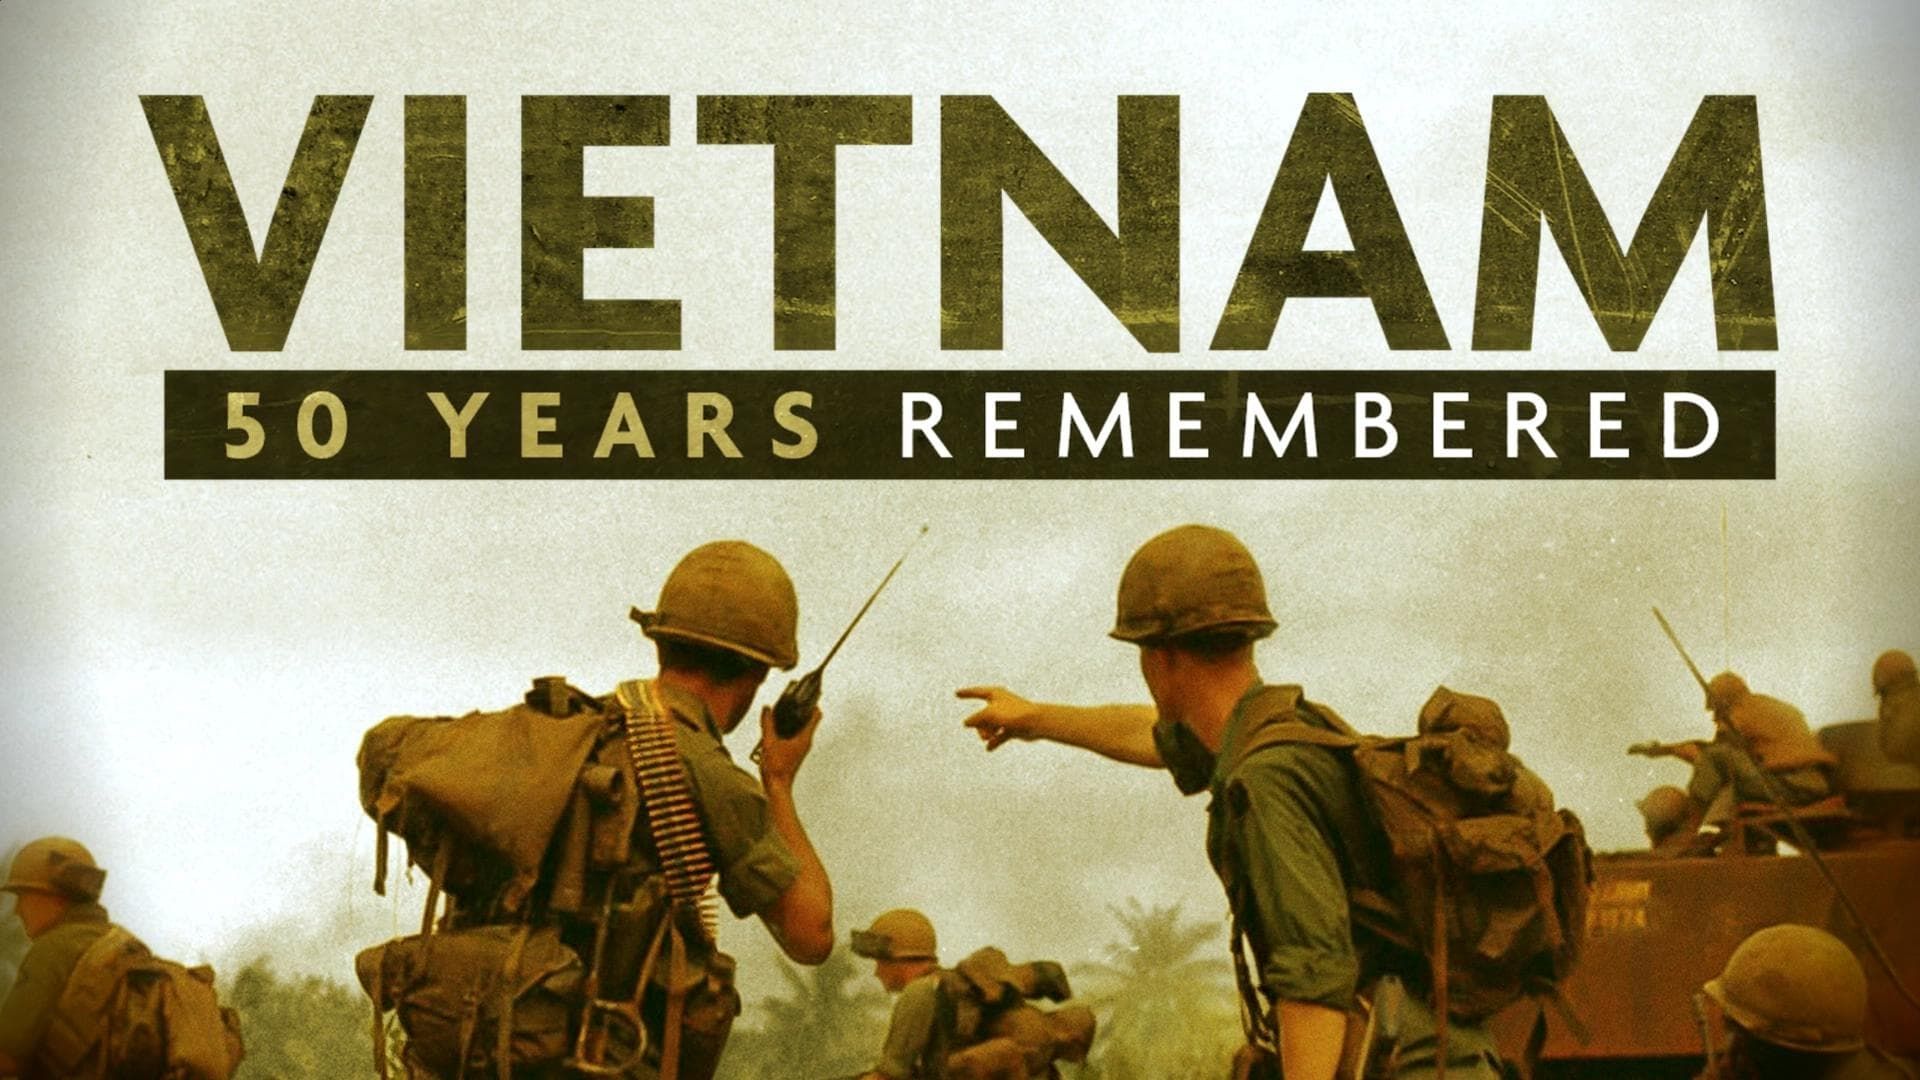 Vietnam: 50 Years Remembered background